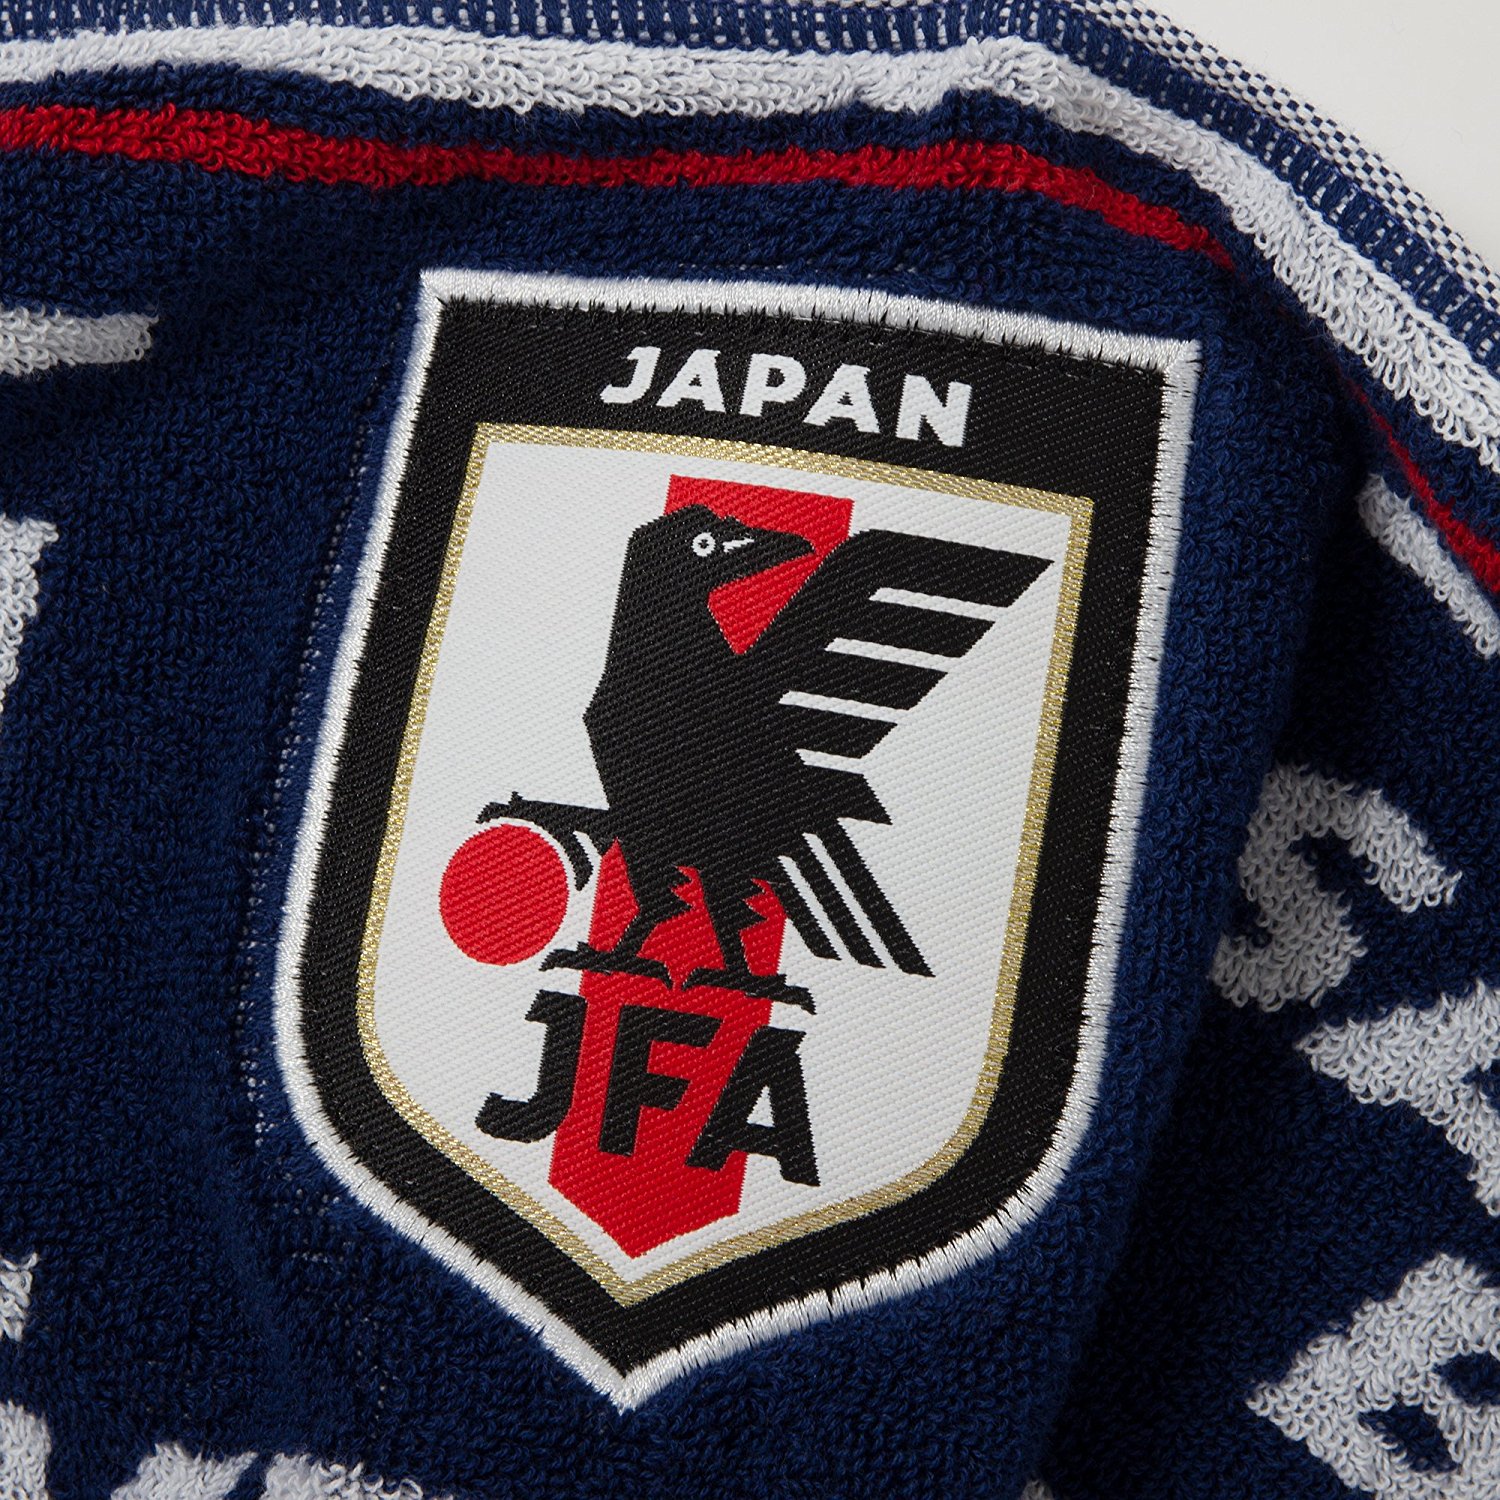 Jfa サッカー日本代表 18年 タオルマフラー 今治ブランド認定 エンブレム 商品詳細 セレプレ